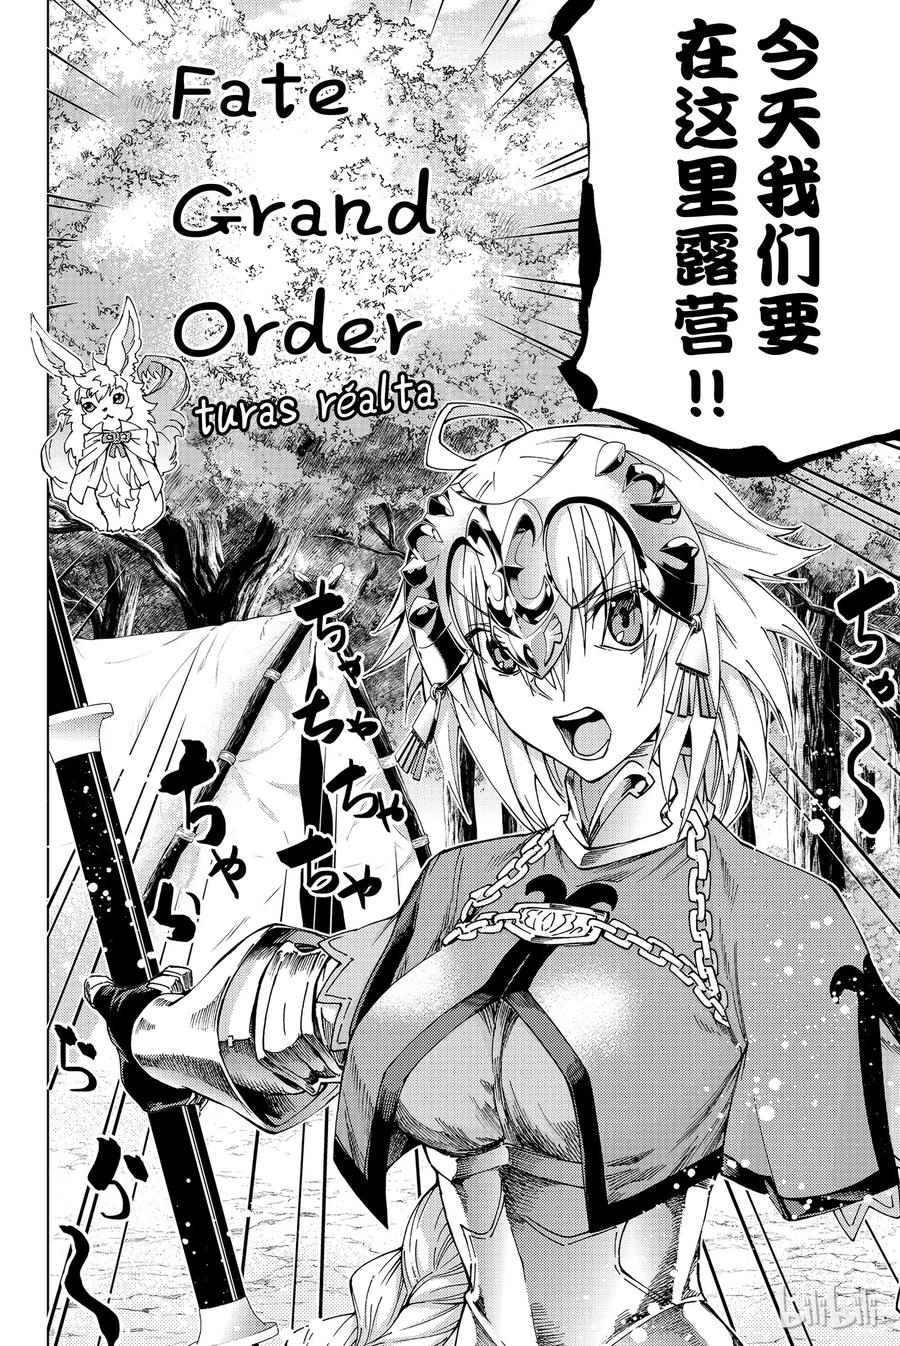 Fate/Grand Order-turas realta- - 10 第一特異點⑤ - 5